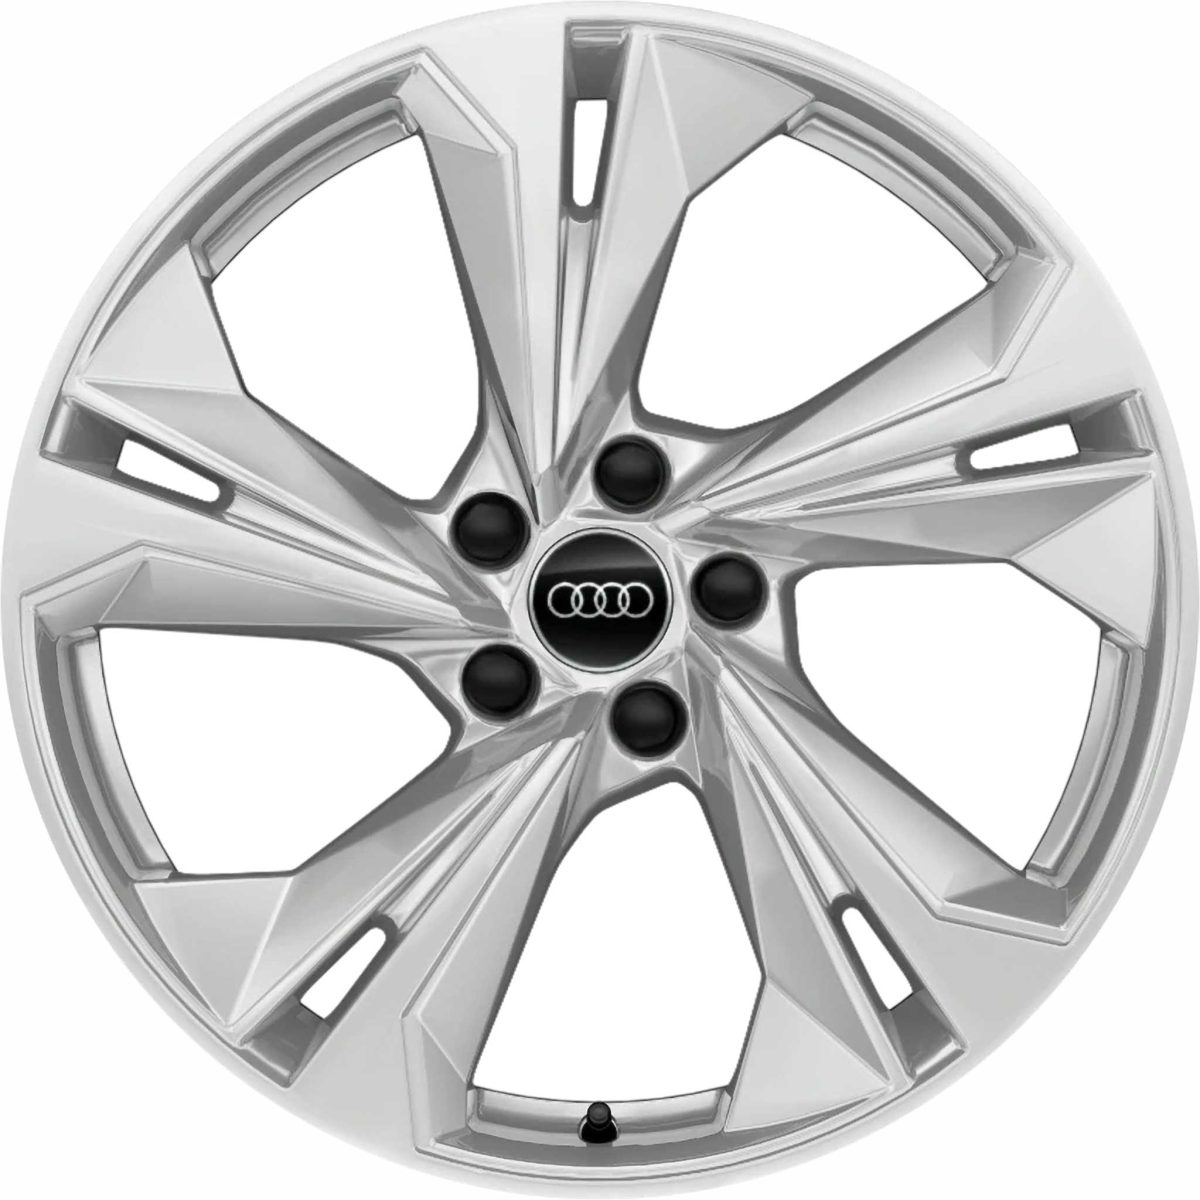 Genuine Audi A3 S3 8Y 5 Double Spoke 19" Inch Alloy Wheels with Silver Finish 8Y0 601 025 K